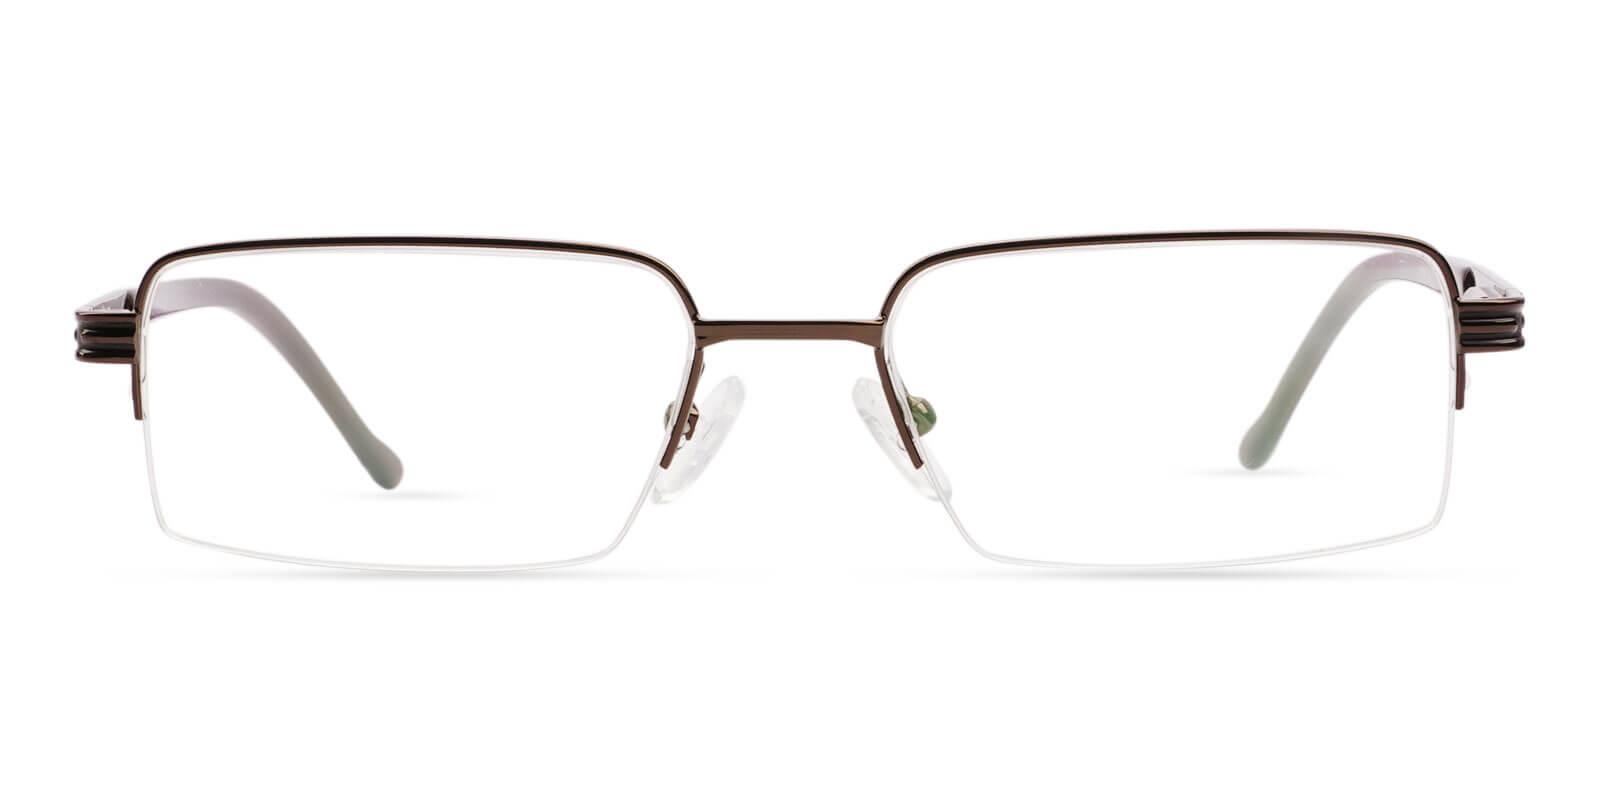 Nicaragua Brown Metal Eyeglasses , SpringHinges , NosePads Frames from ABBE Glasses